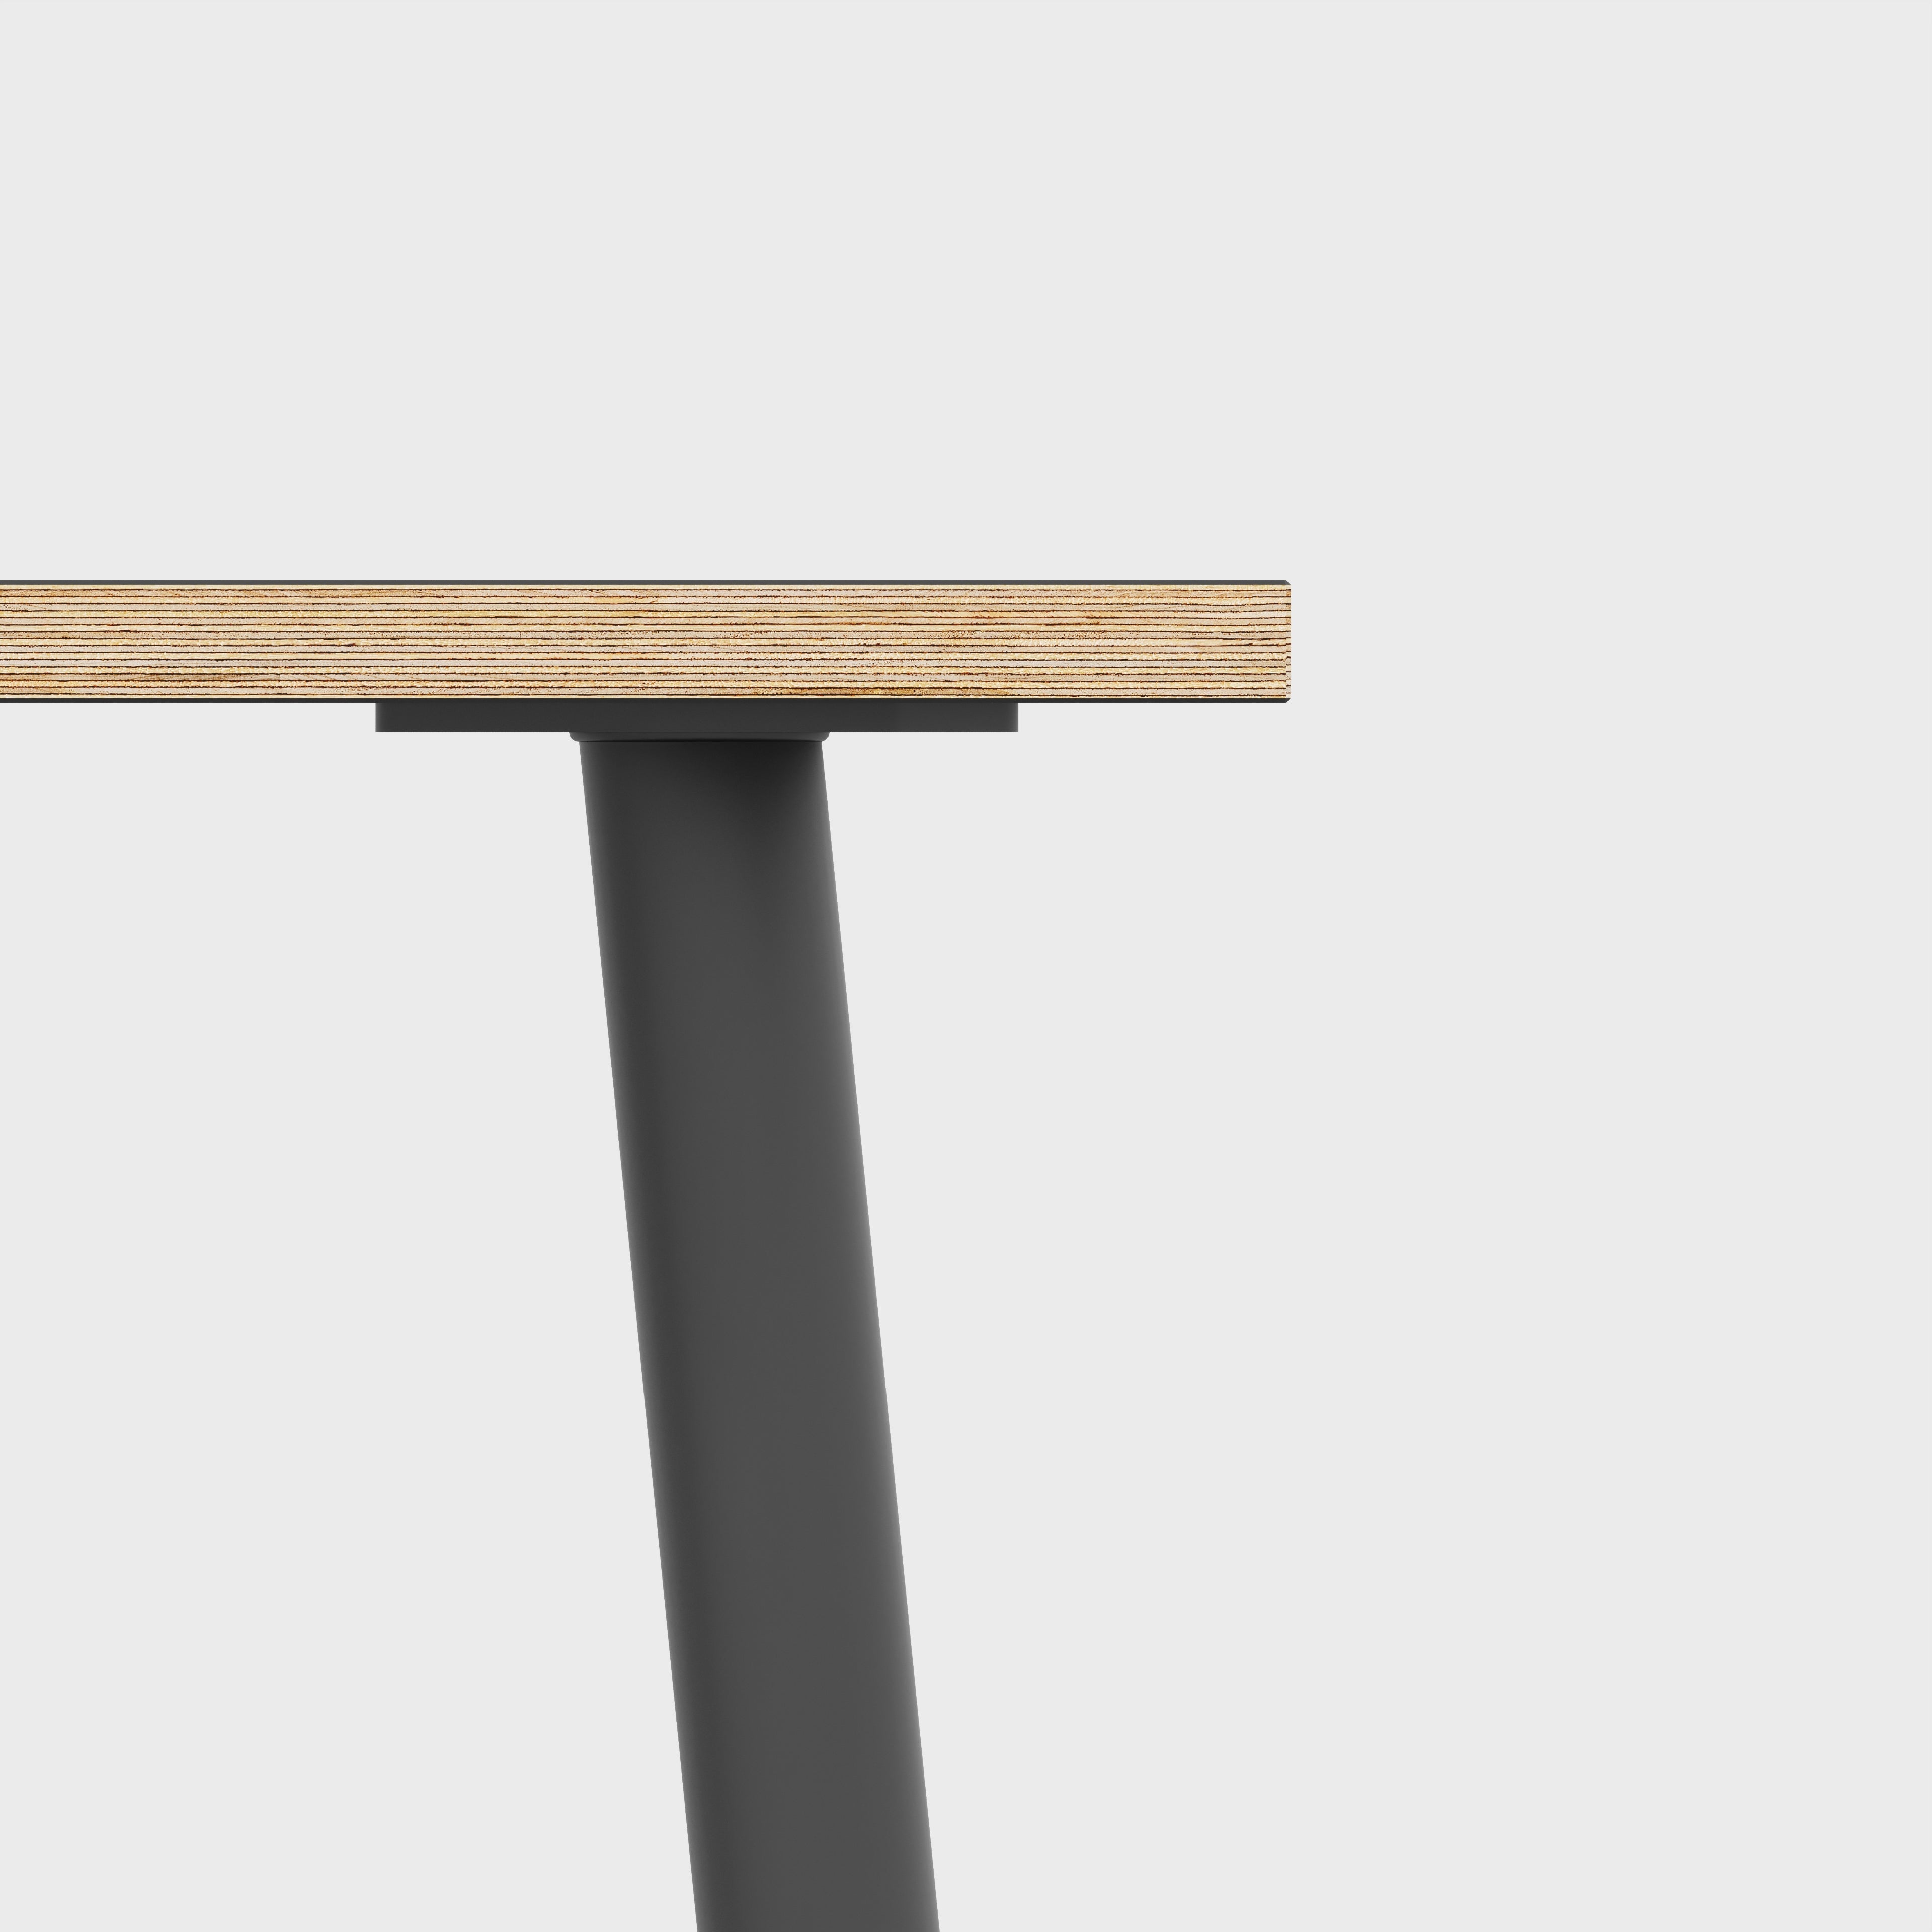 Desk with Black Round Single Pin Legs - Plywood Oak - 1200(w) x 600(d) x 735(h)